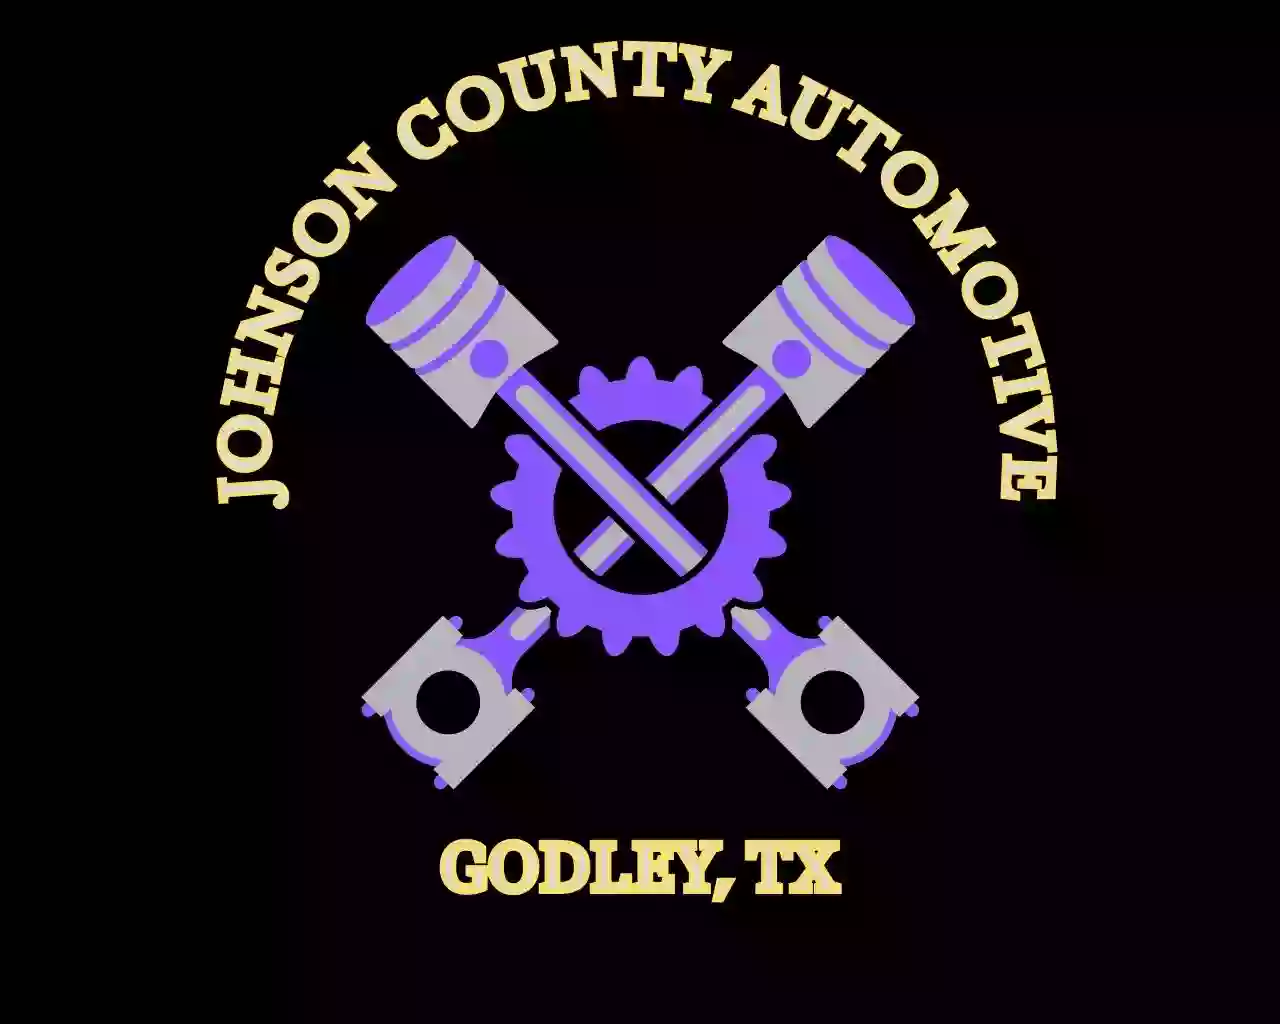 Johnson County Automotive